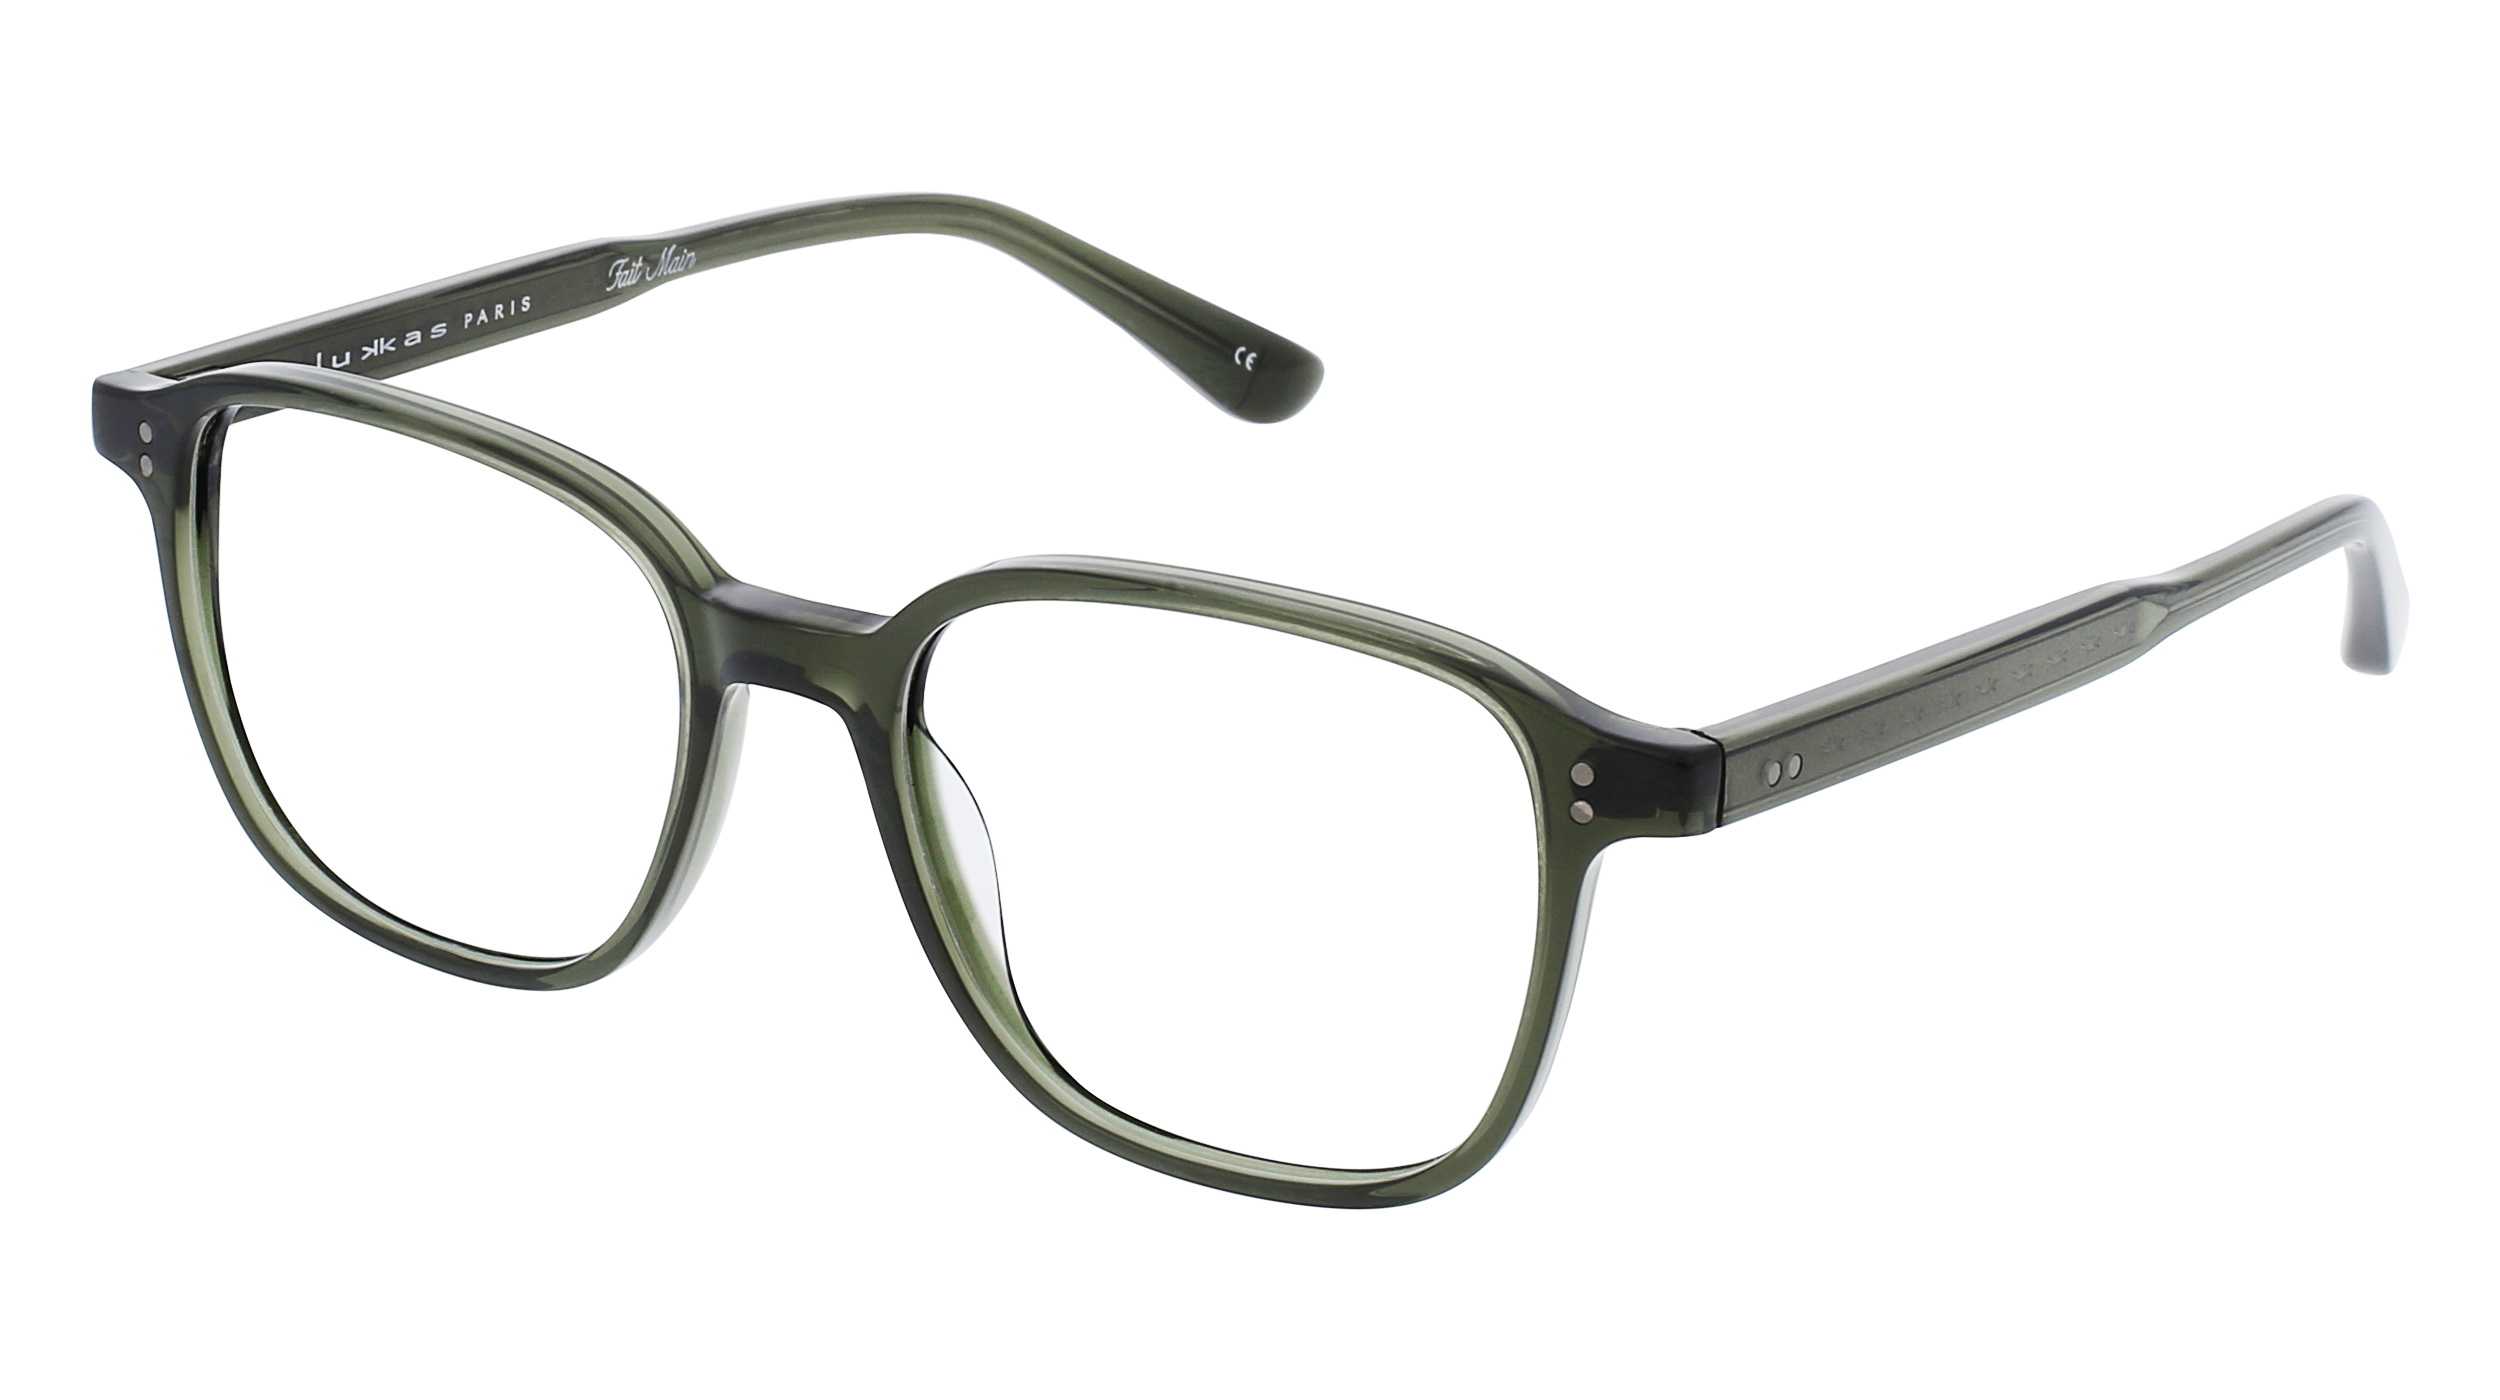 lunettes-de-vue-lukkas-lu-2202-kaki-50-17-homme-kaki-transparent-carr-e